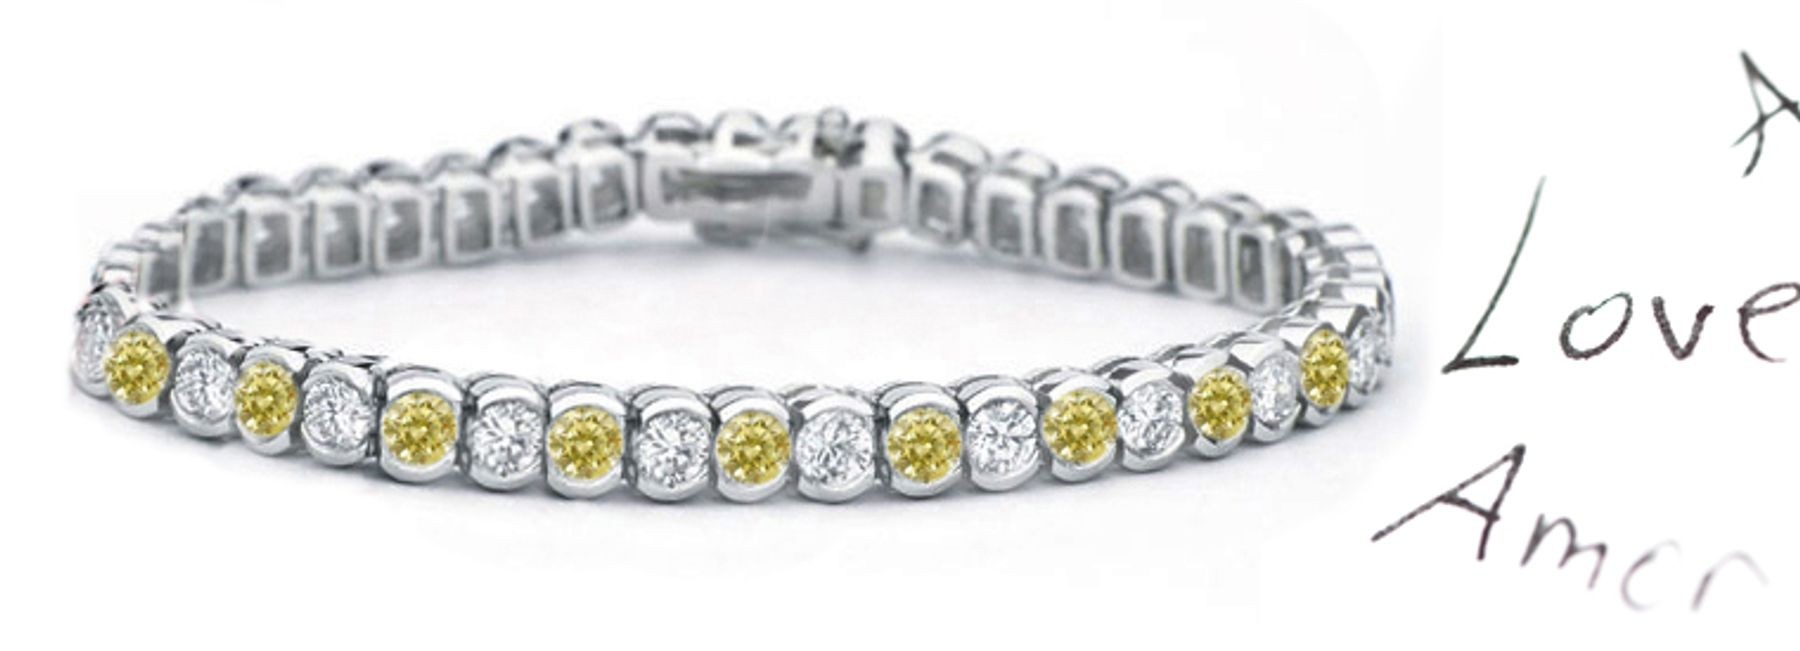 Premier Colored Diamonds Designer Collection - Yellow Colored Diamonds & White Diamonds Fancy Yellow Diamond Bracelet